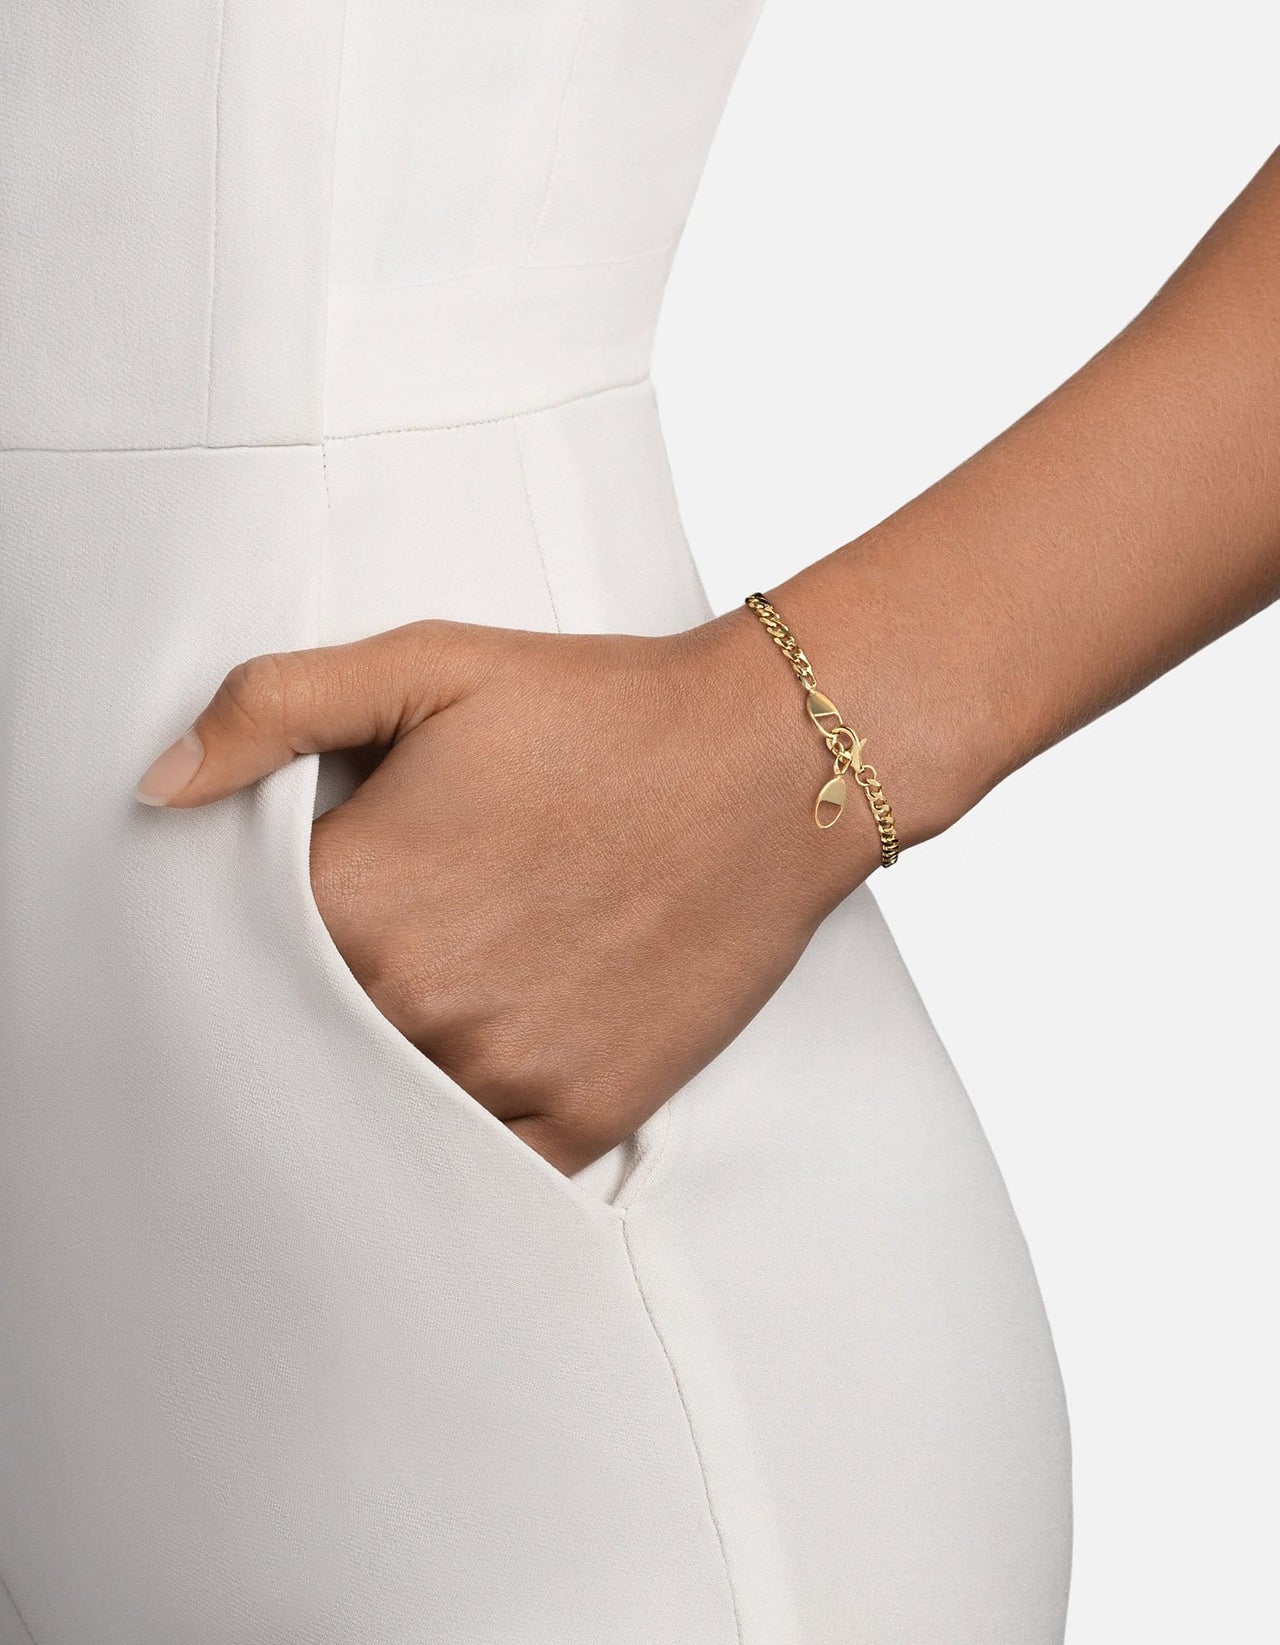 Miansai 3mm ID Chain Bracelet, Gold Vermeil | Small Polished Gold